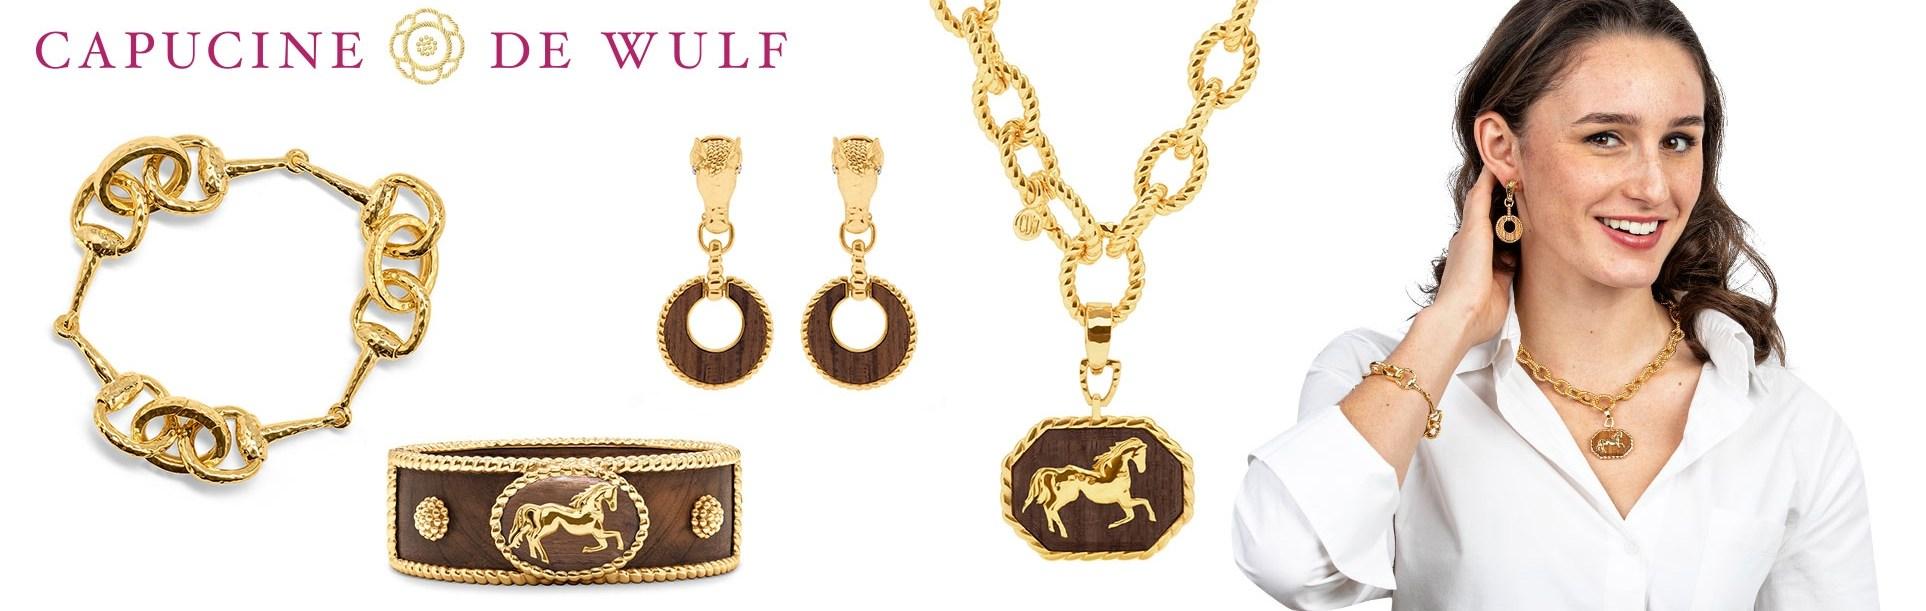 Capucine De Wulf Jewelry lifestyle products slide 5